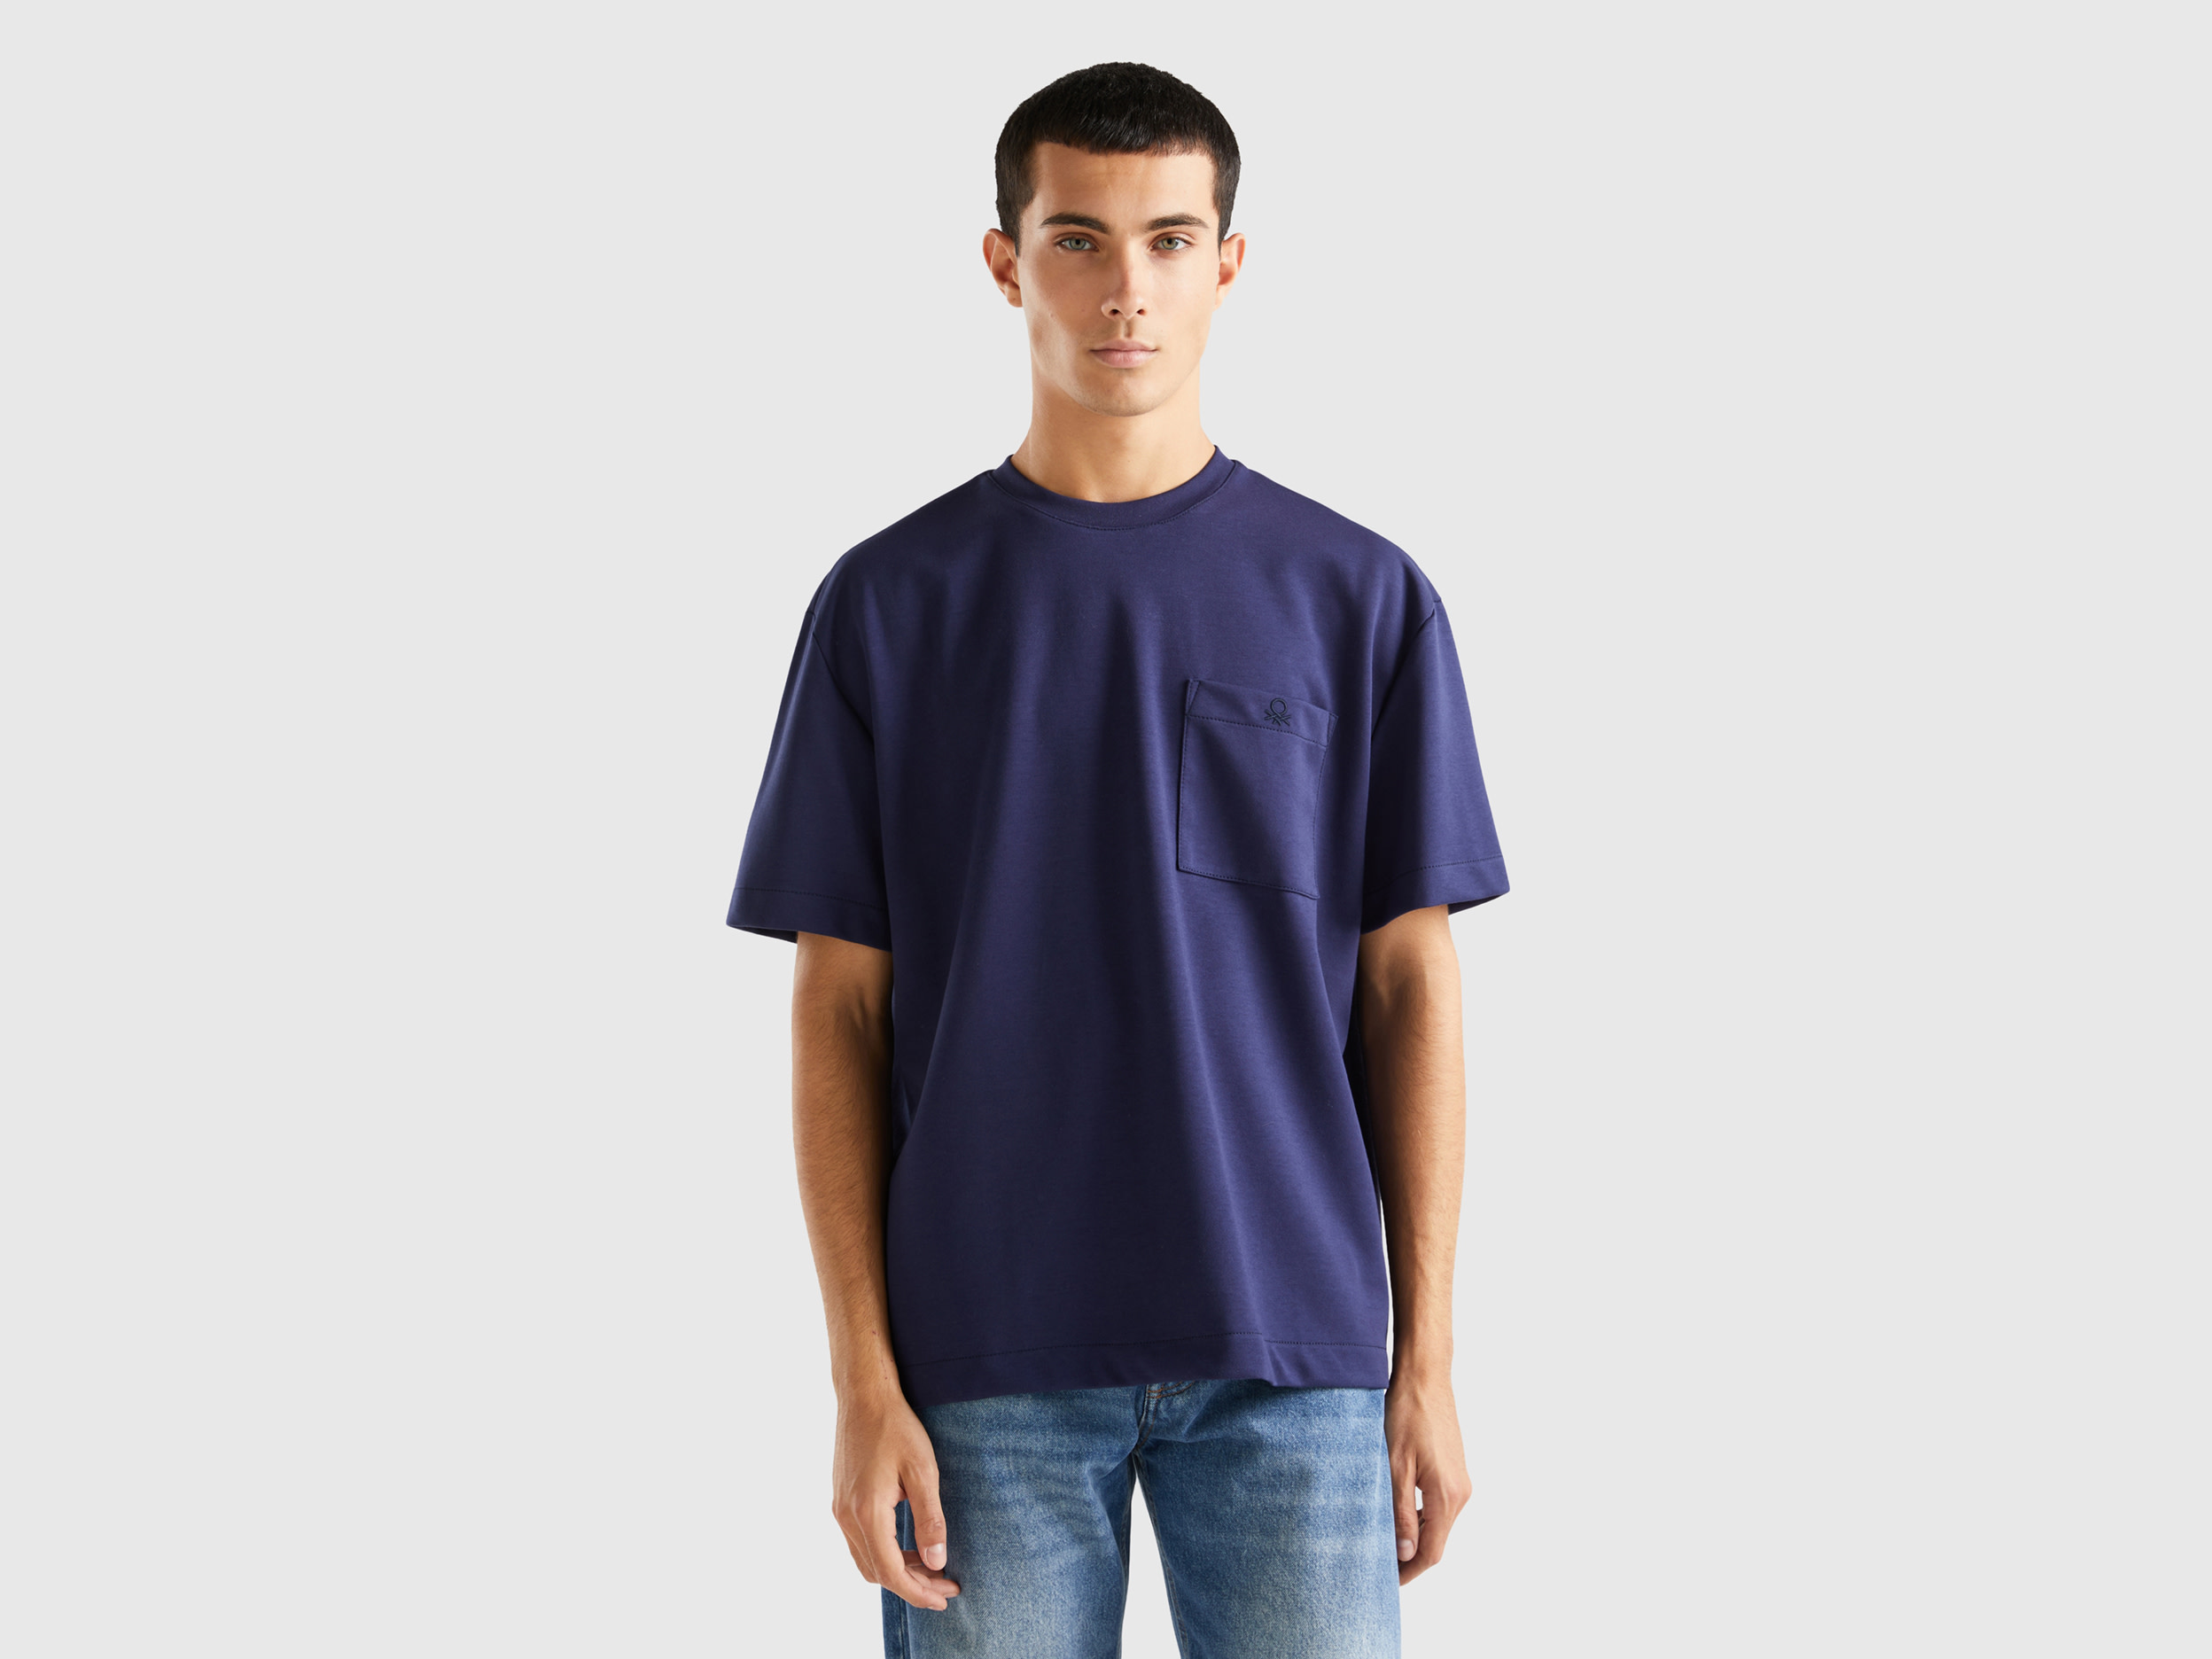 Benetton, Oversized T-shirt With Pocket, size XS, Dark Blue, Men